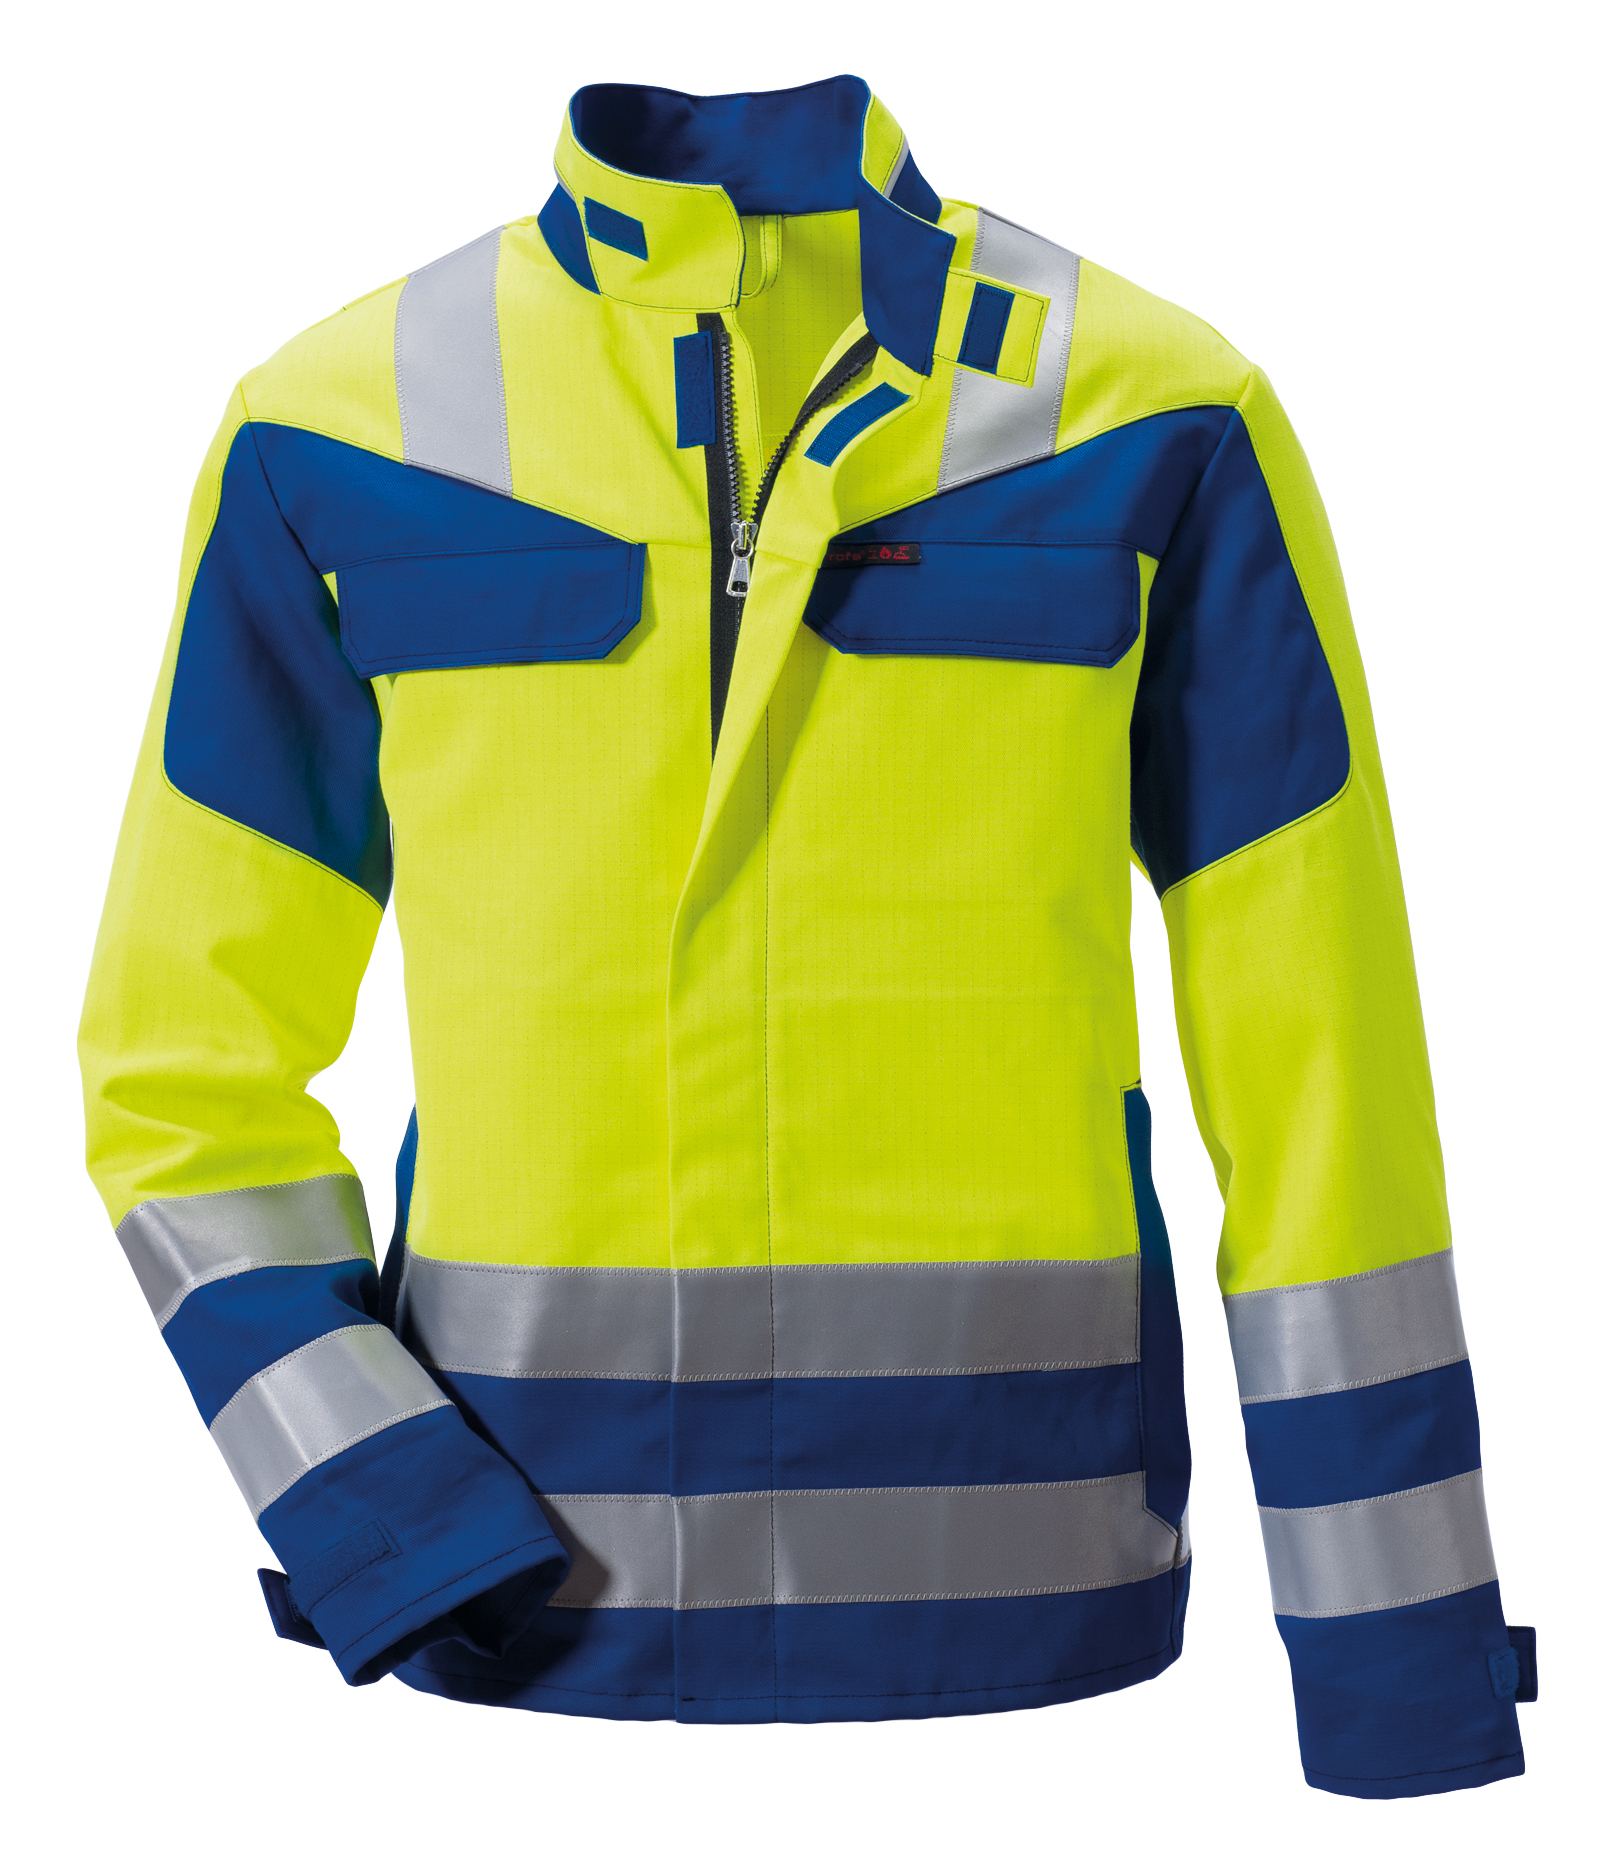 ROFA-Workwear, Warnschutz-Jacke, Multi 7, ca. 330 g/m², leuchtgelb-kornblau